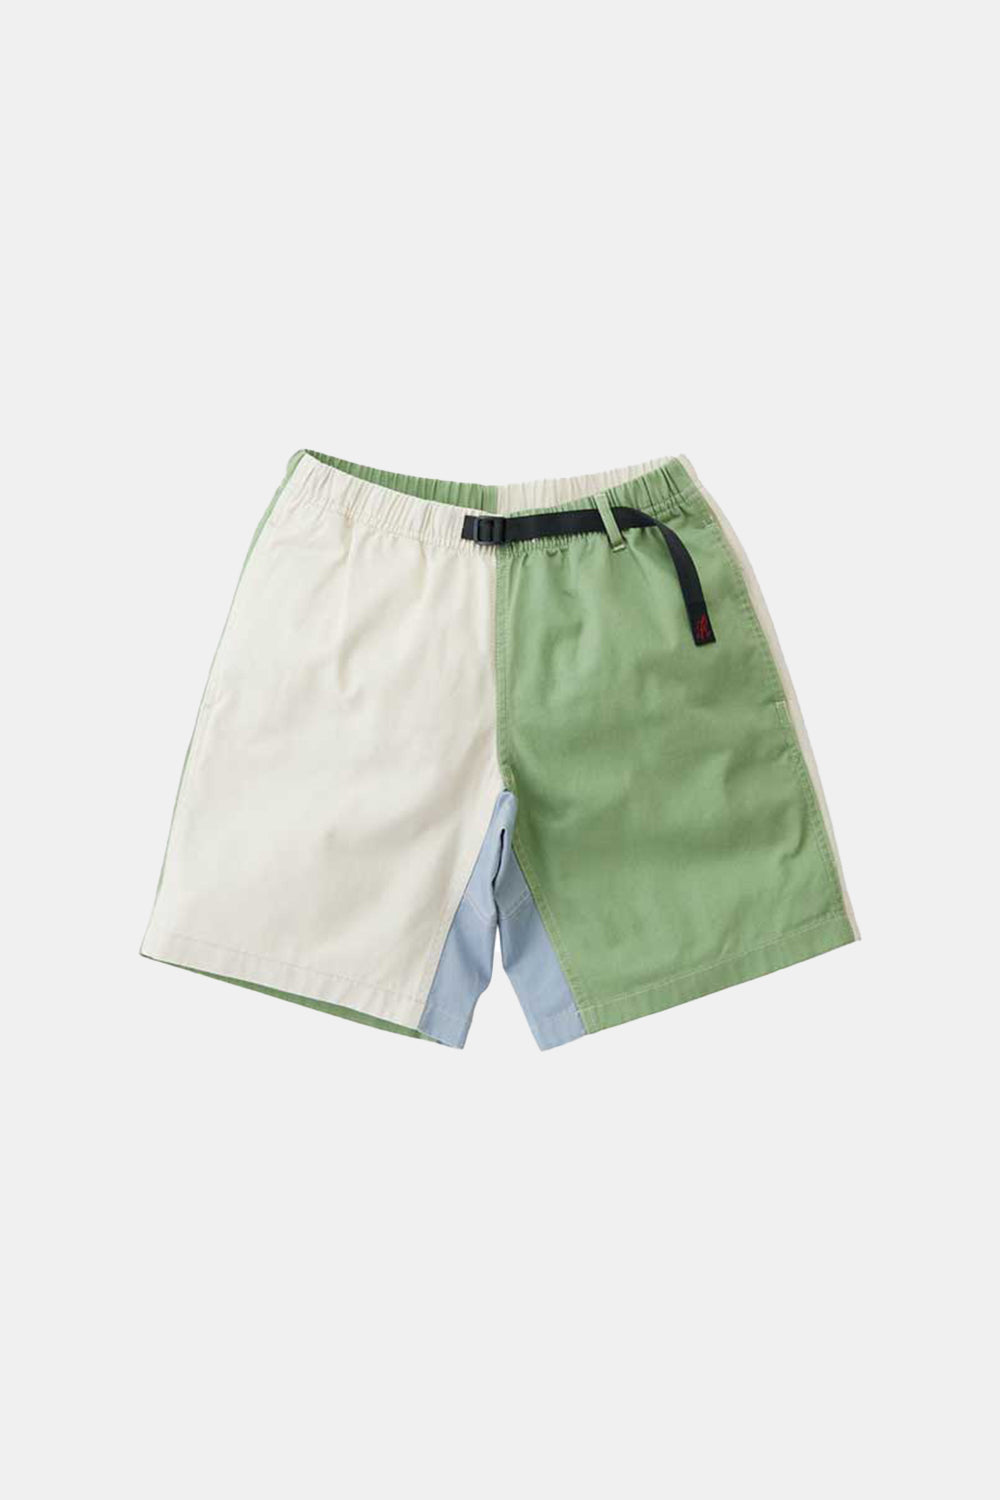 Gramicci G-Shorts Double-Ringspun Organic Cotton Twill (Crazy)